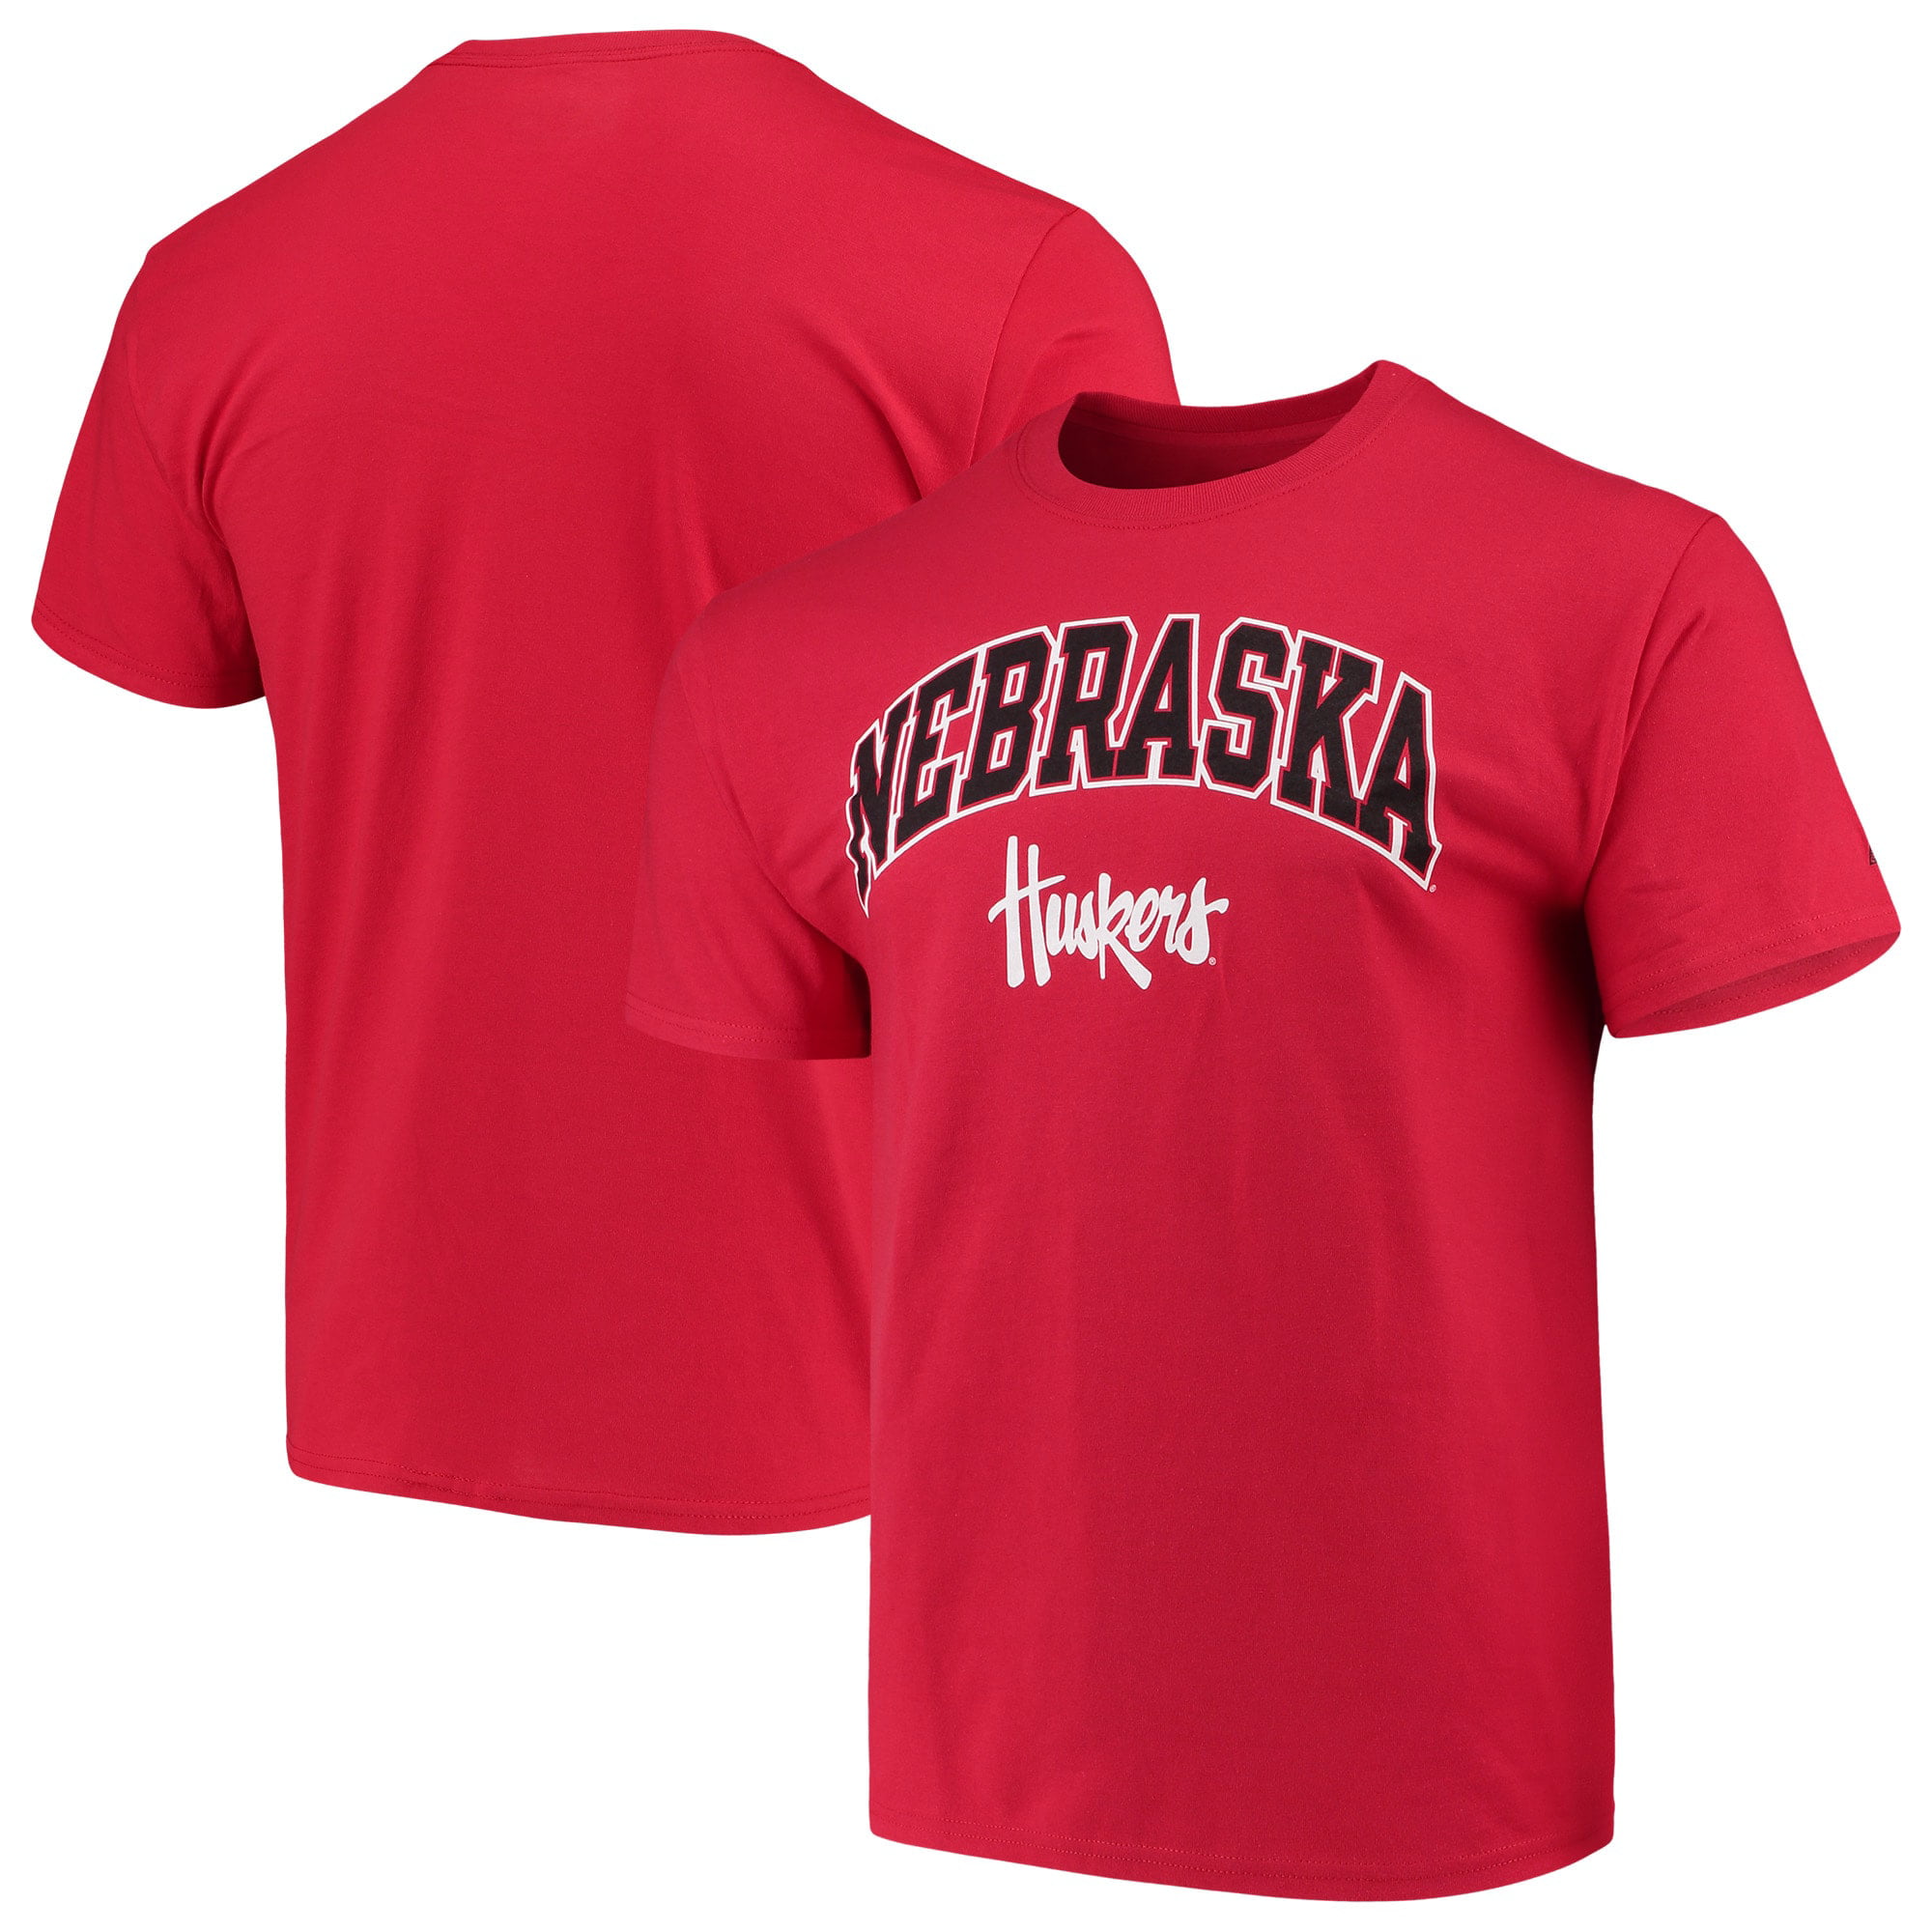 Siskiyou Nebraska Cornhuskers 3-D Trailer Hitch Cover NCAA College Athletics Fan Shop Sports Team Merchandise